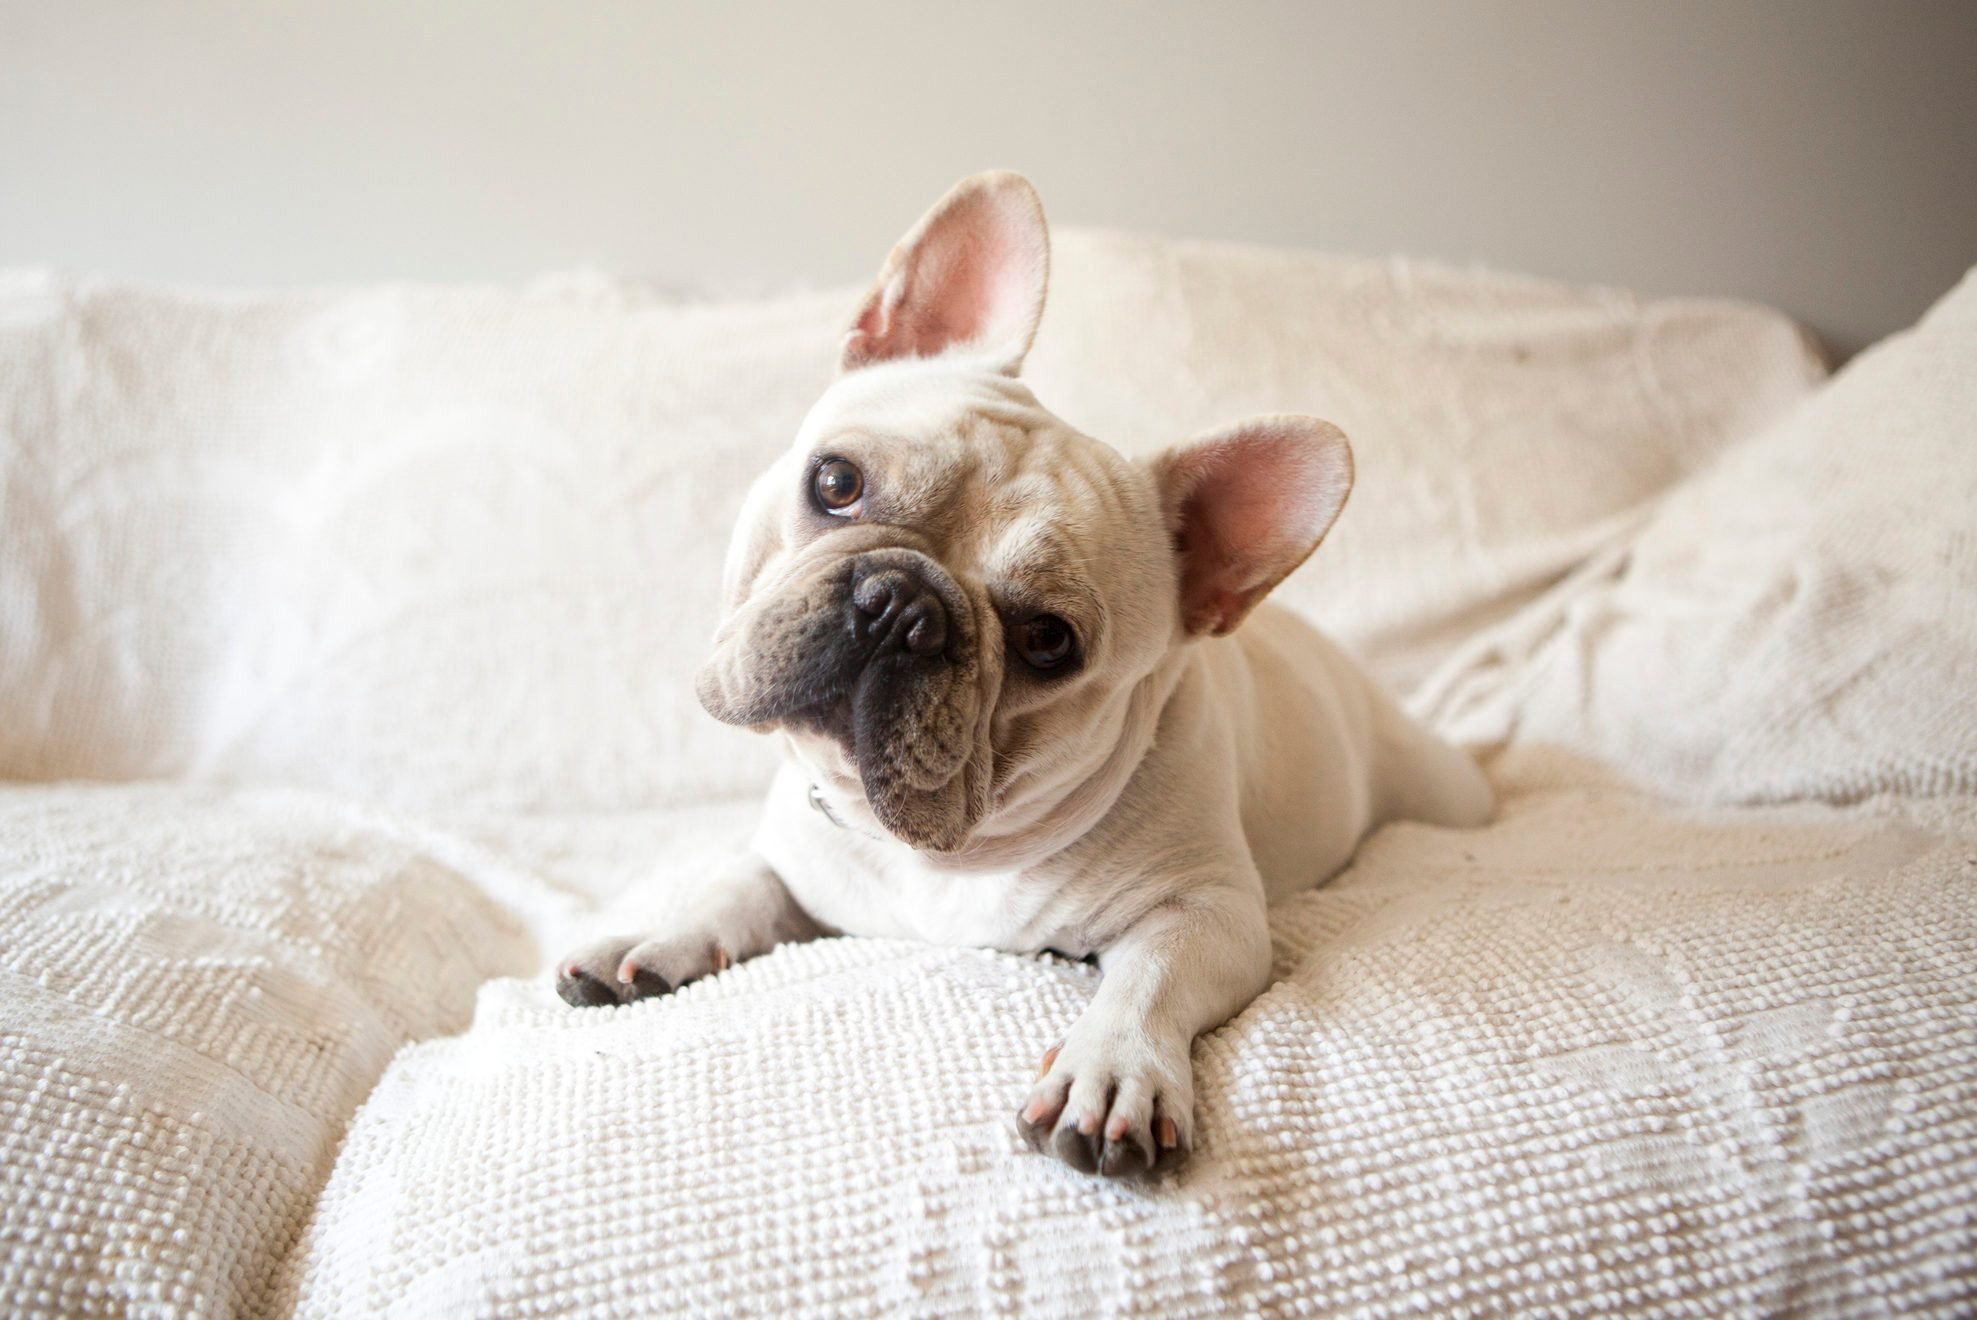 Usa, New York State, New York City, Portrait of French Bulldog lying down on sofa